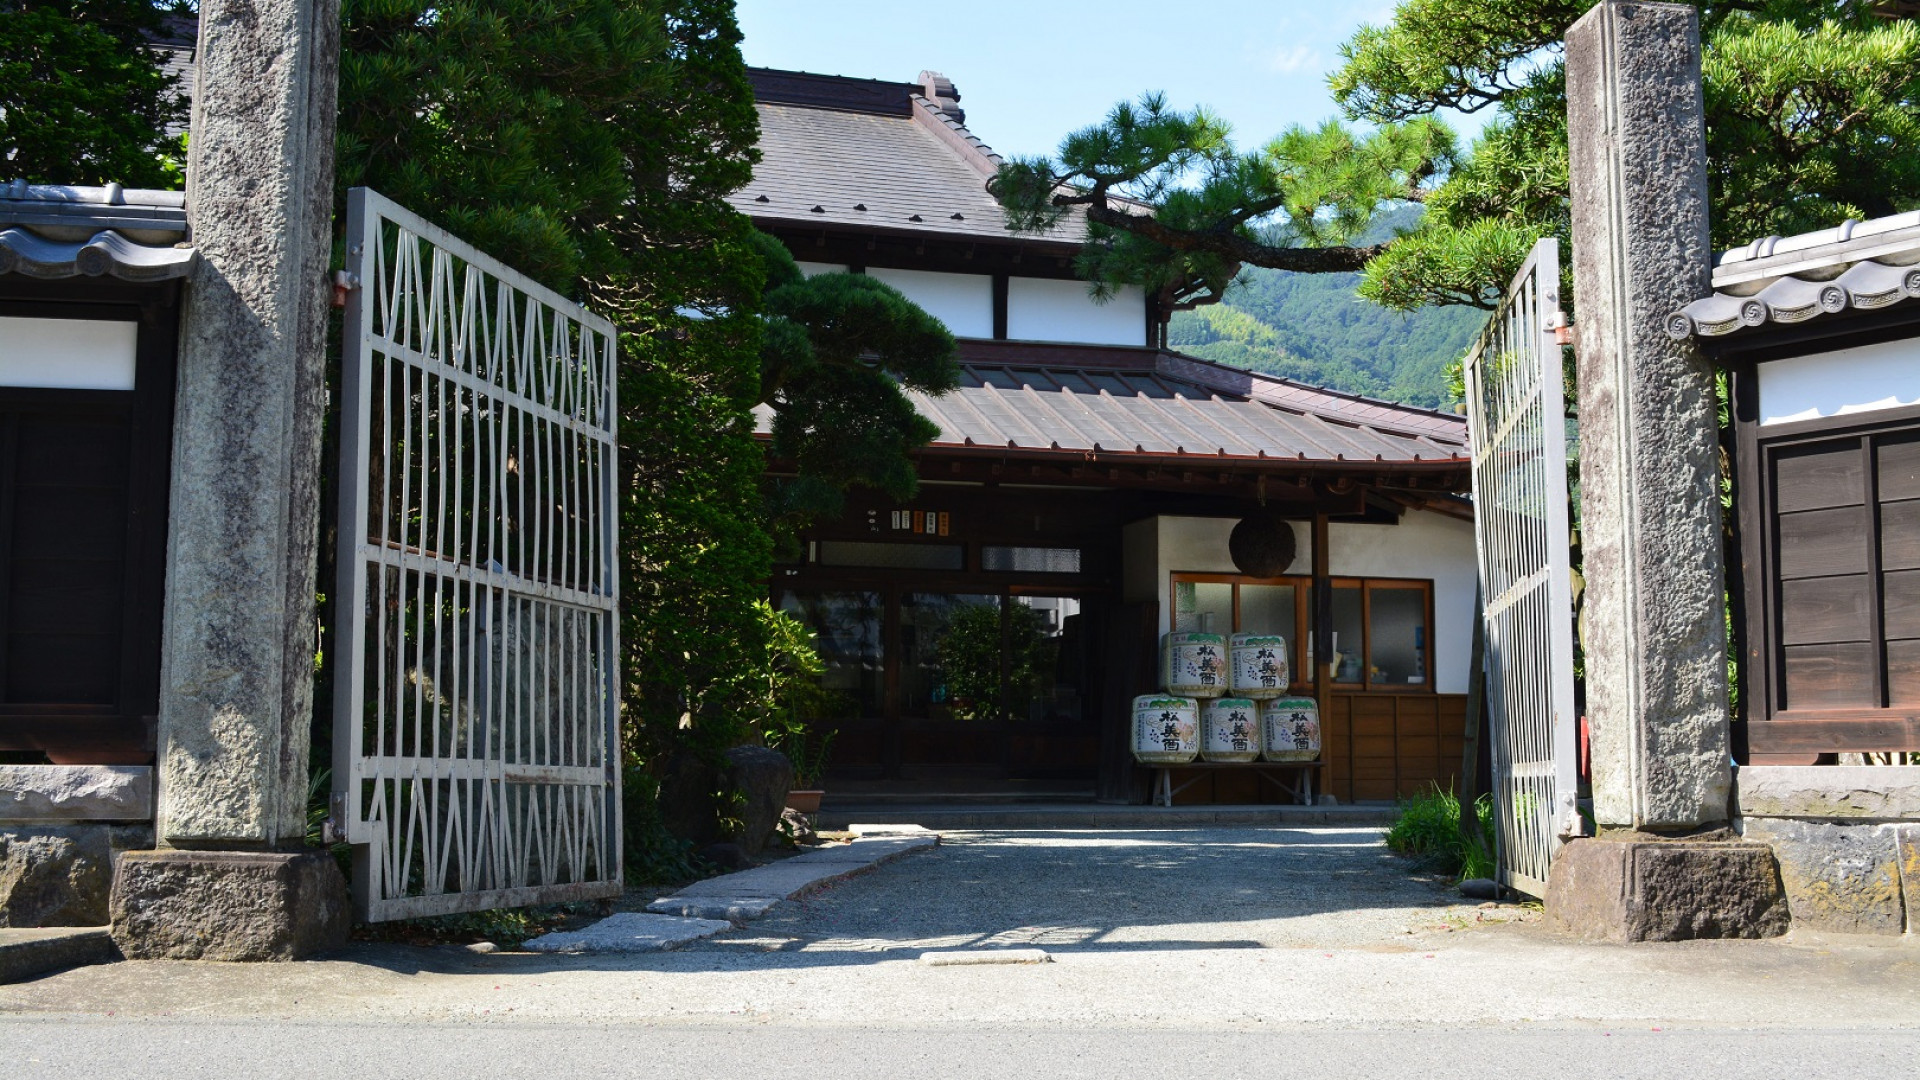 Fábrica de sake Nakazawa